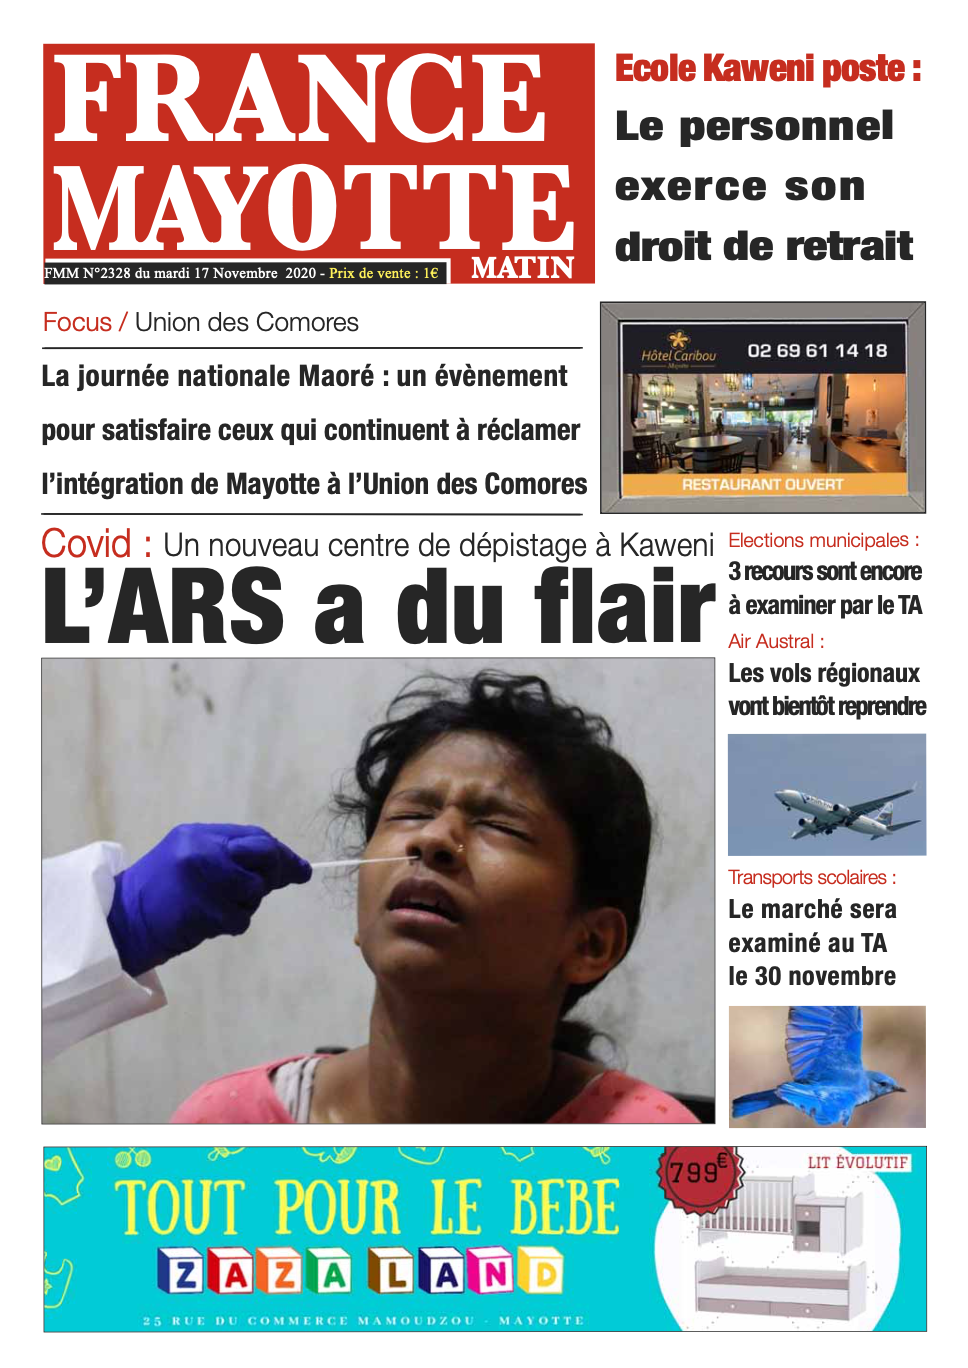 France Mayotte Mardi 17 novembre 2020